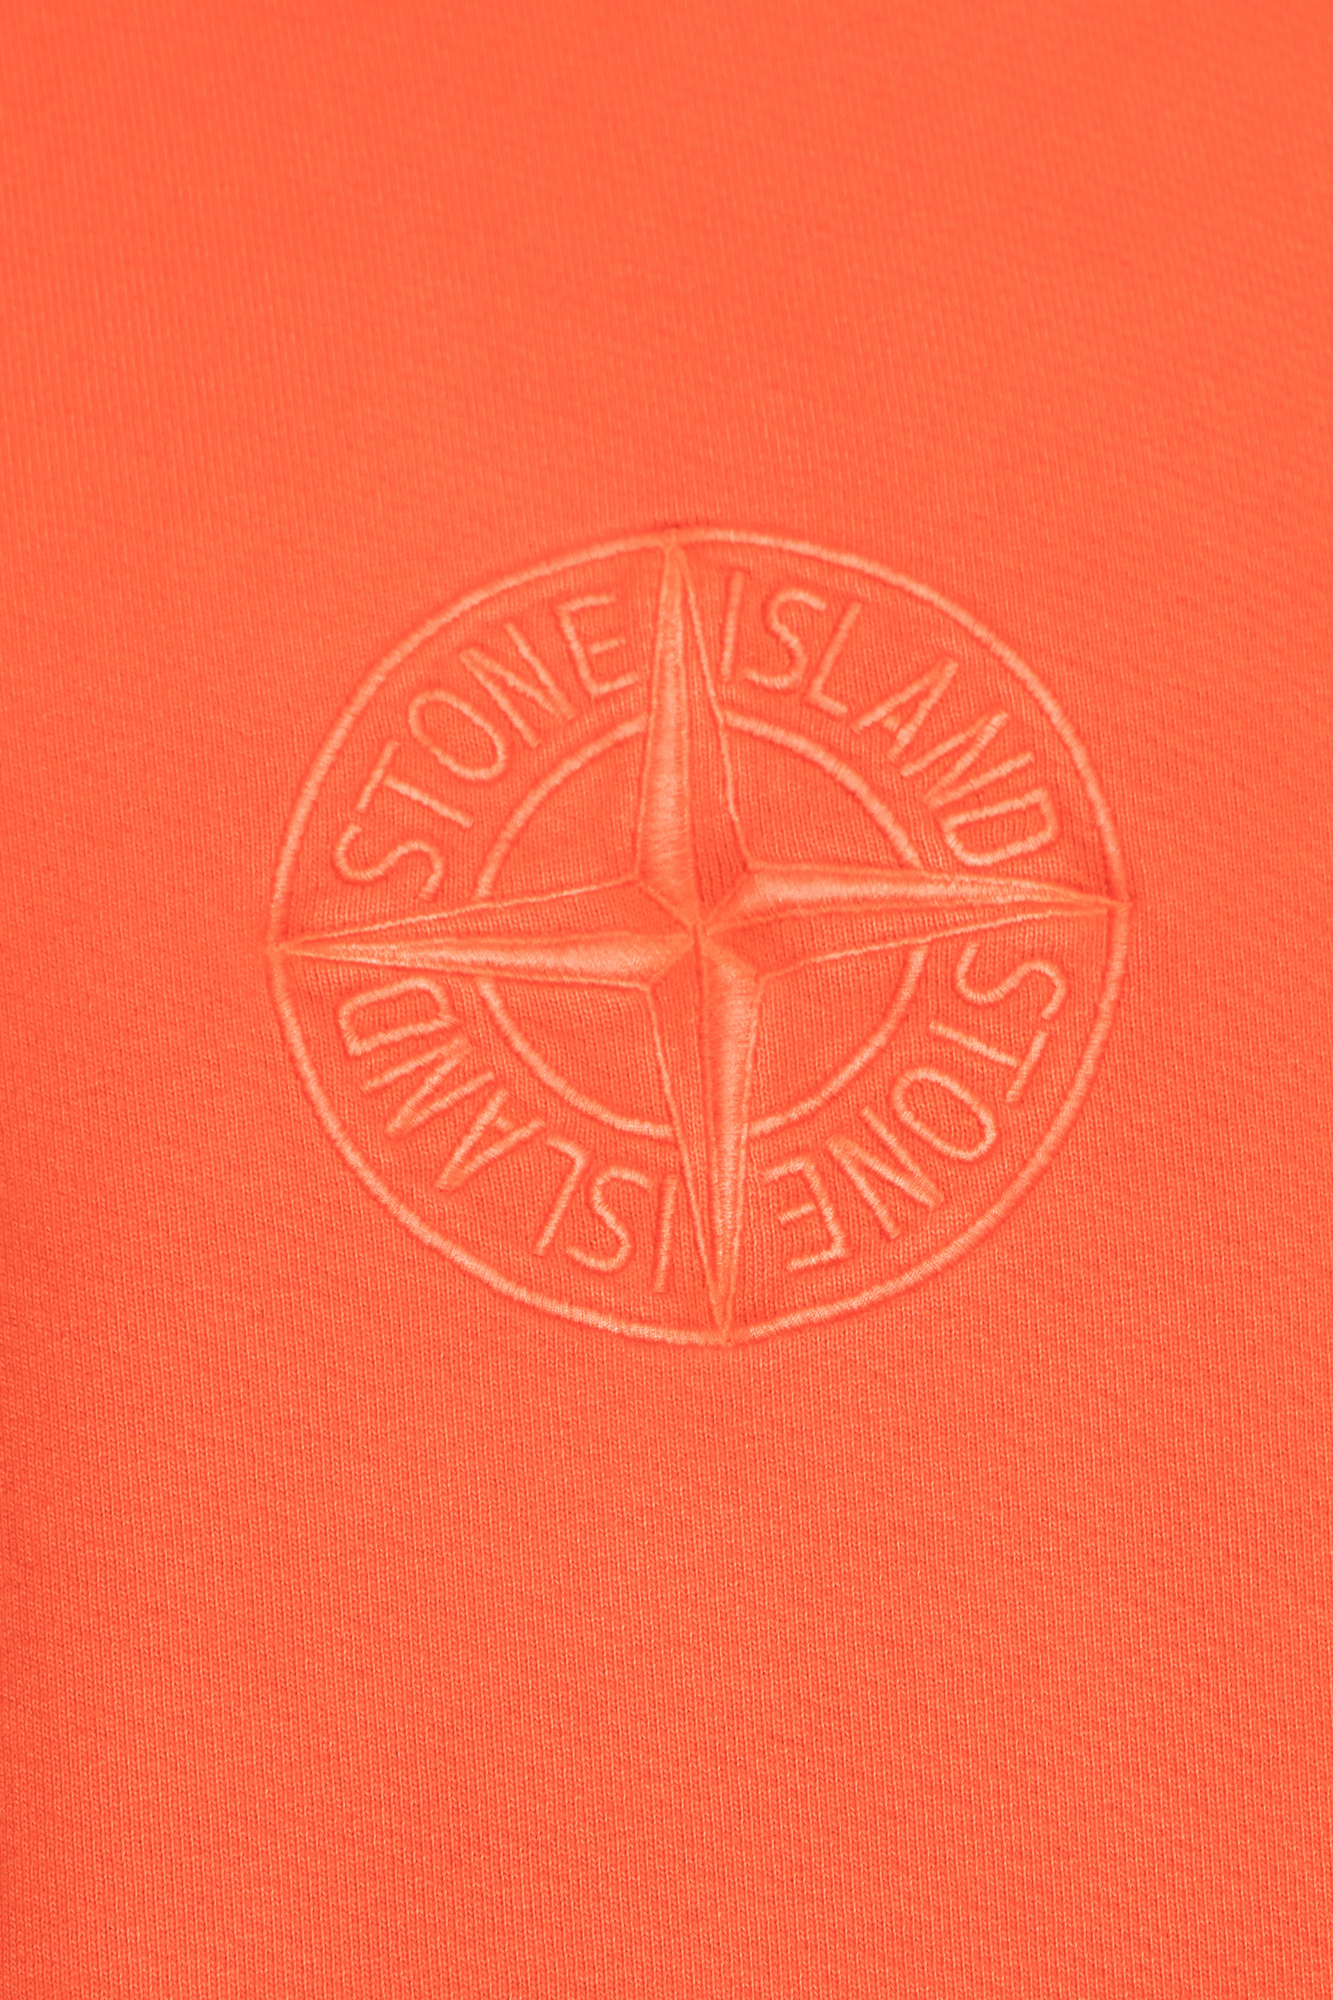 Stone Island Alexander Wang Jackets for Women